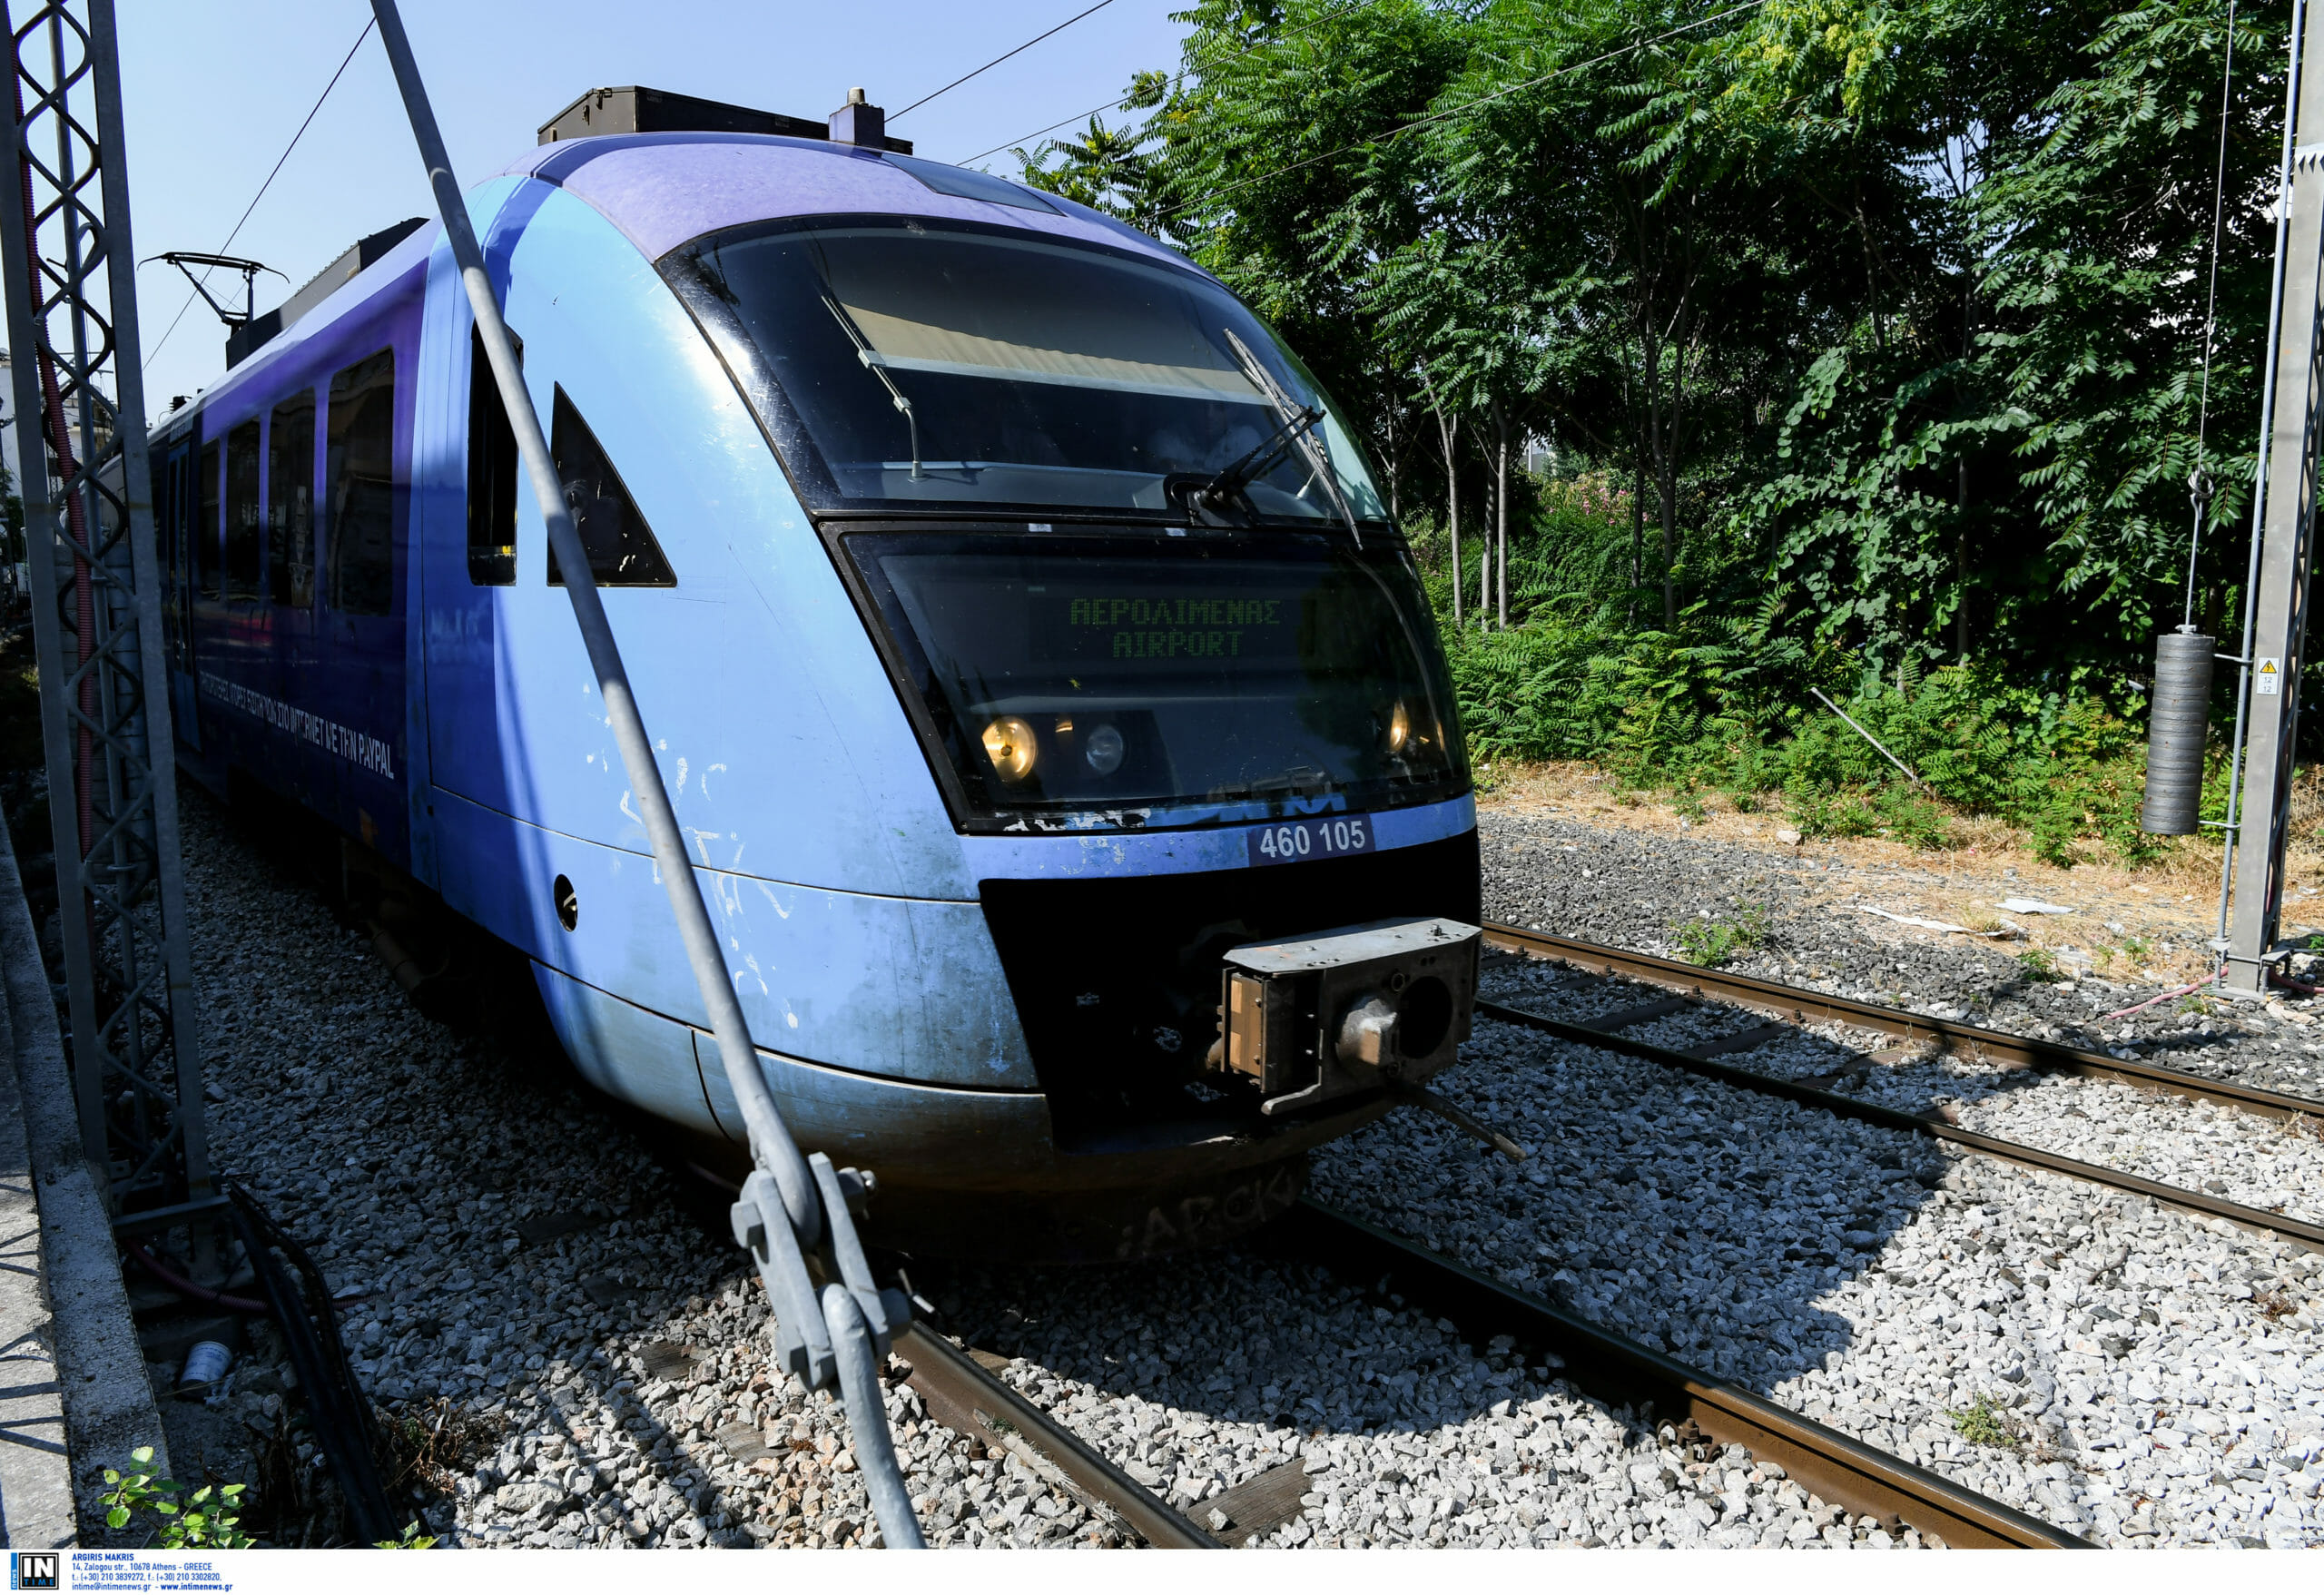 Hellenic Train: Τροποποιήσεις στα δρομολόγια του προαστιακού στη διαδρομή Άνω Λιόσια – ΣΚΑ